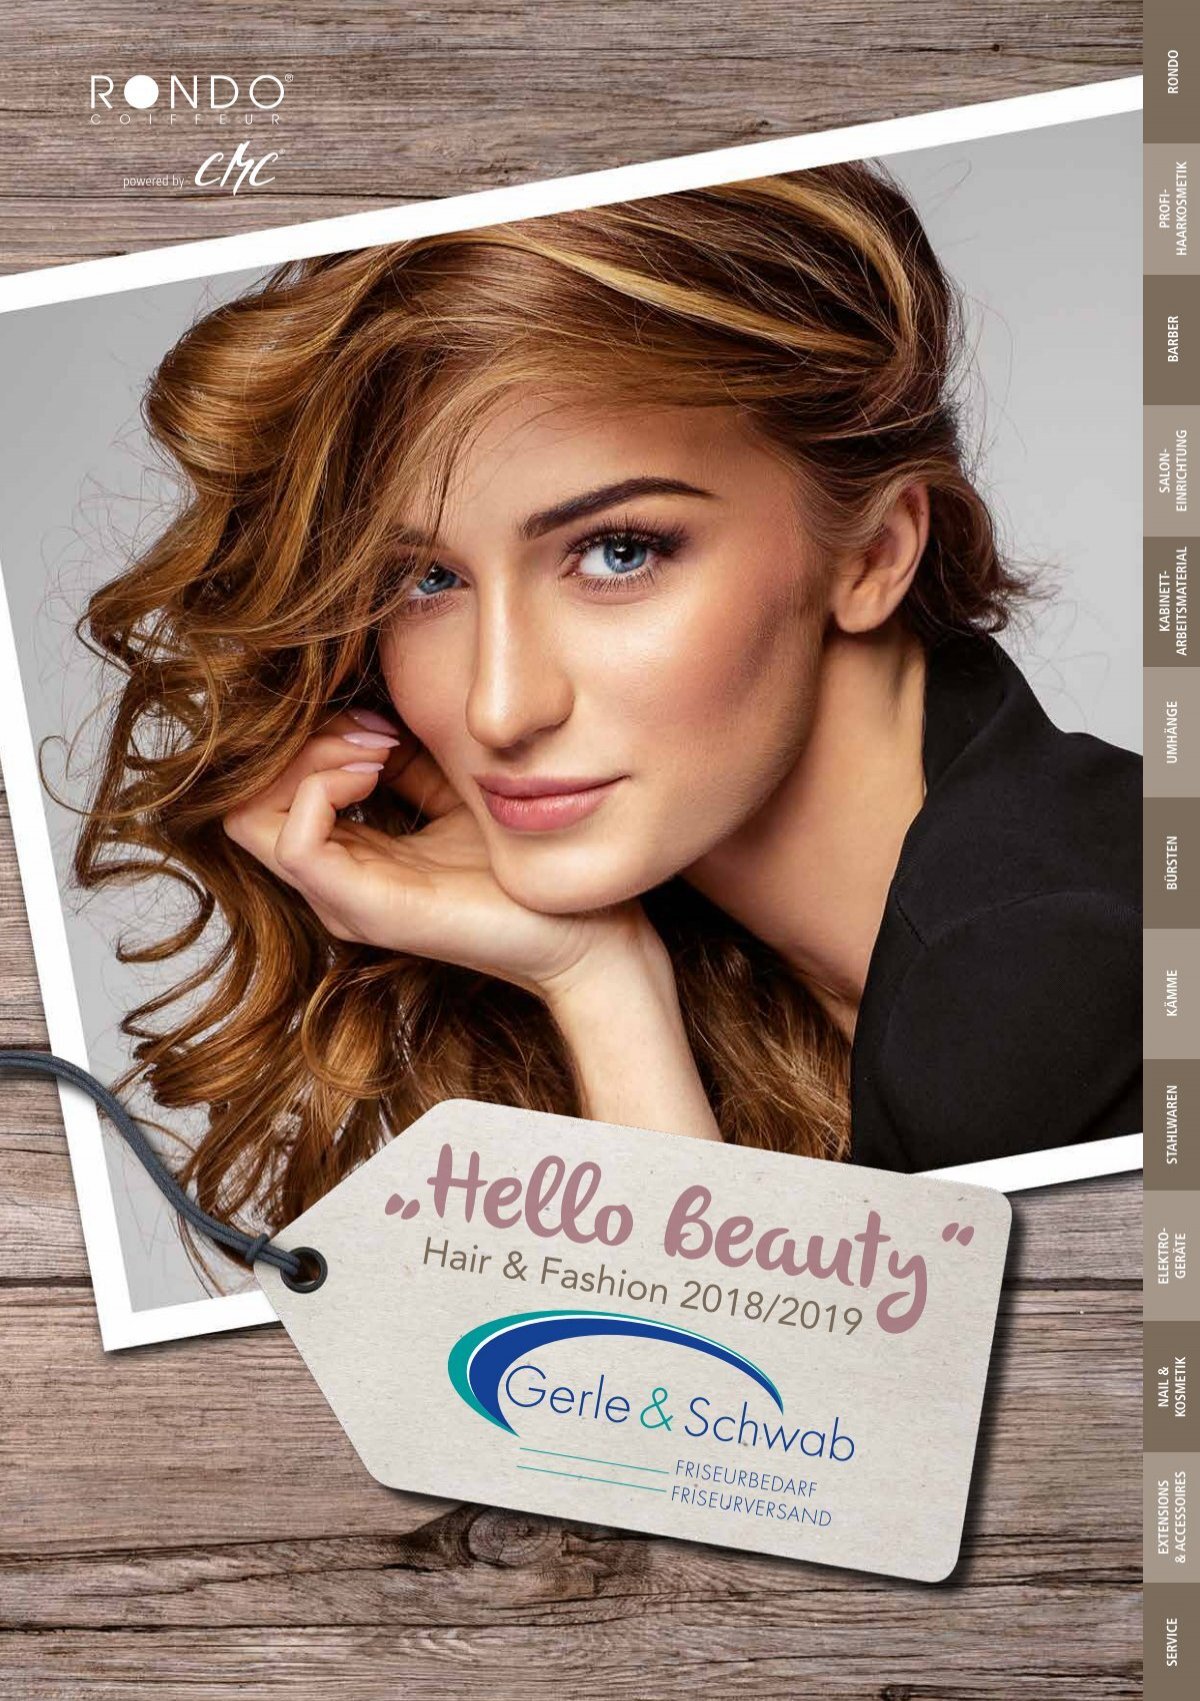 Gerle&Schwab "Hello Beauty" - & 2018/2019 Fashion Hair